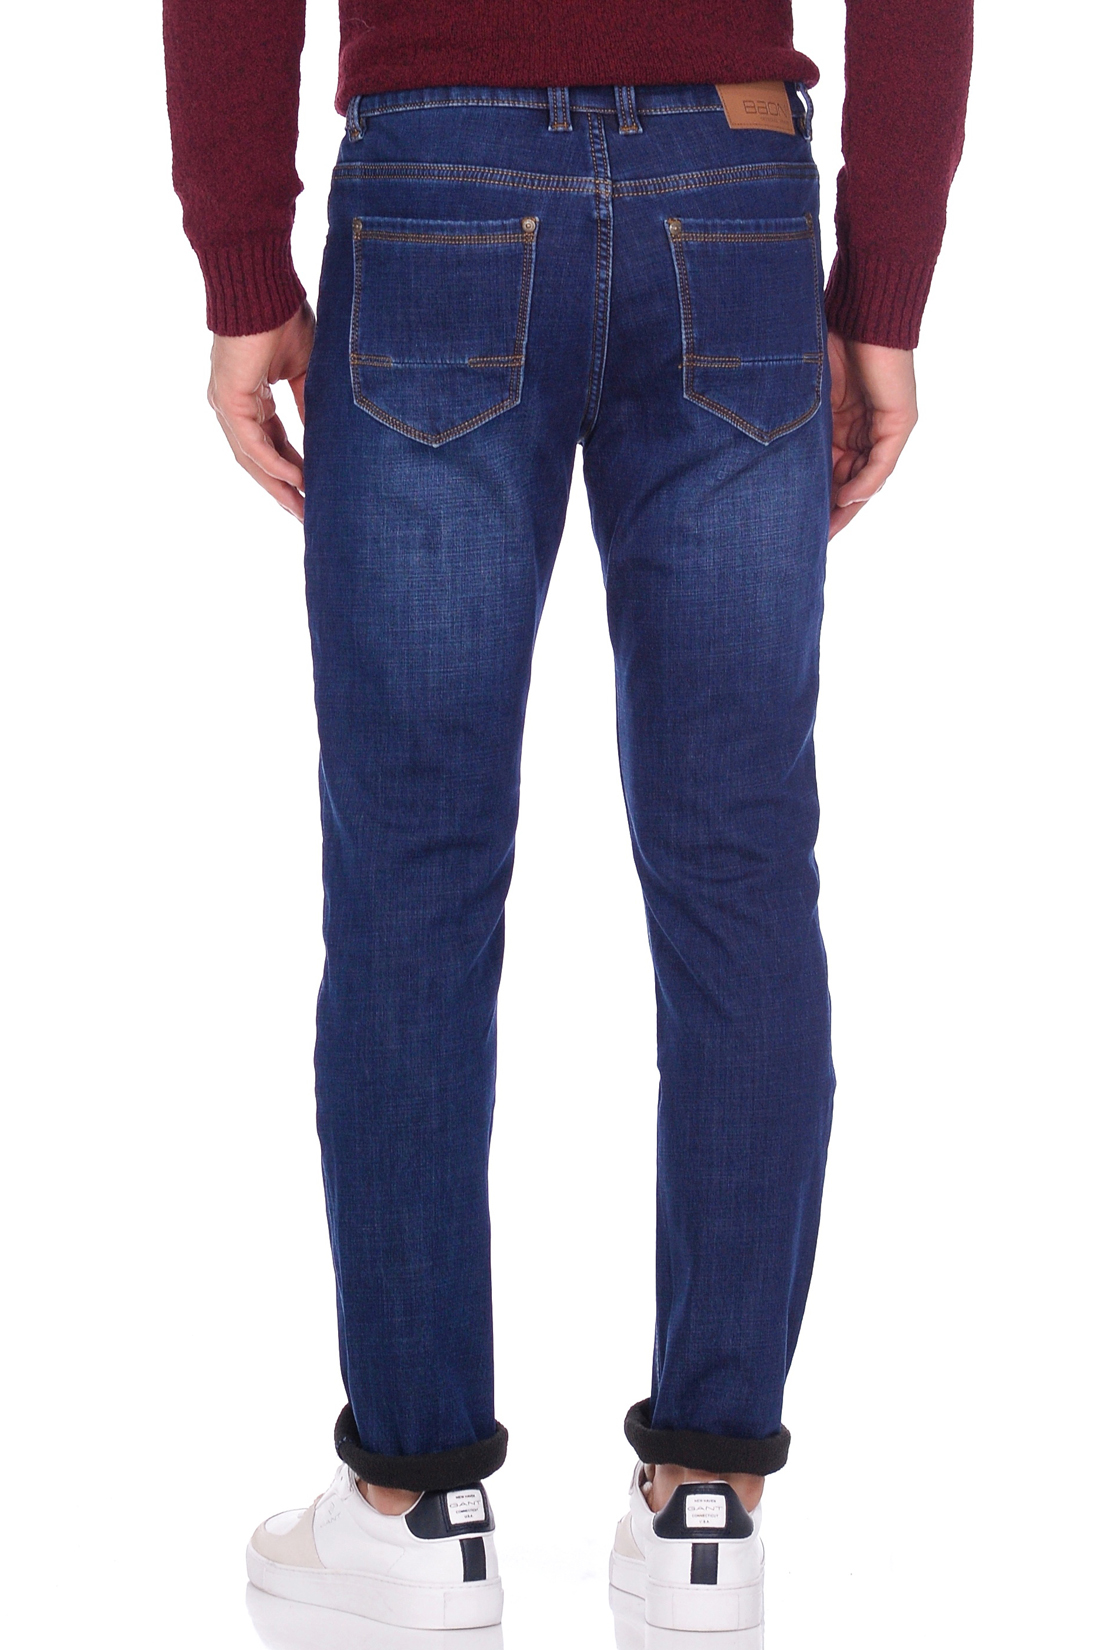 Утеплённые джинсы с заклёпками (арт. baon B809503), размер 30, цвет dark blue denim#синий Утеплённые джинсы с заклёпками (арт. baon B809503) - фото 2